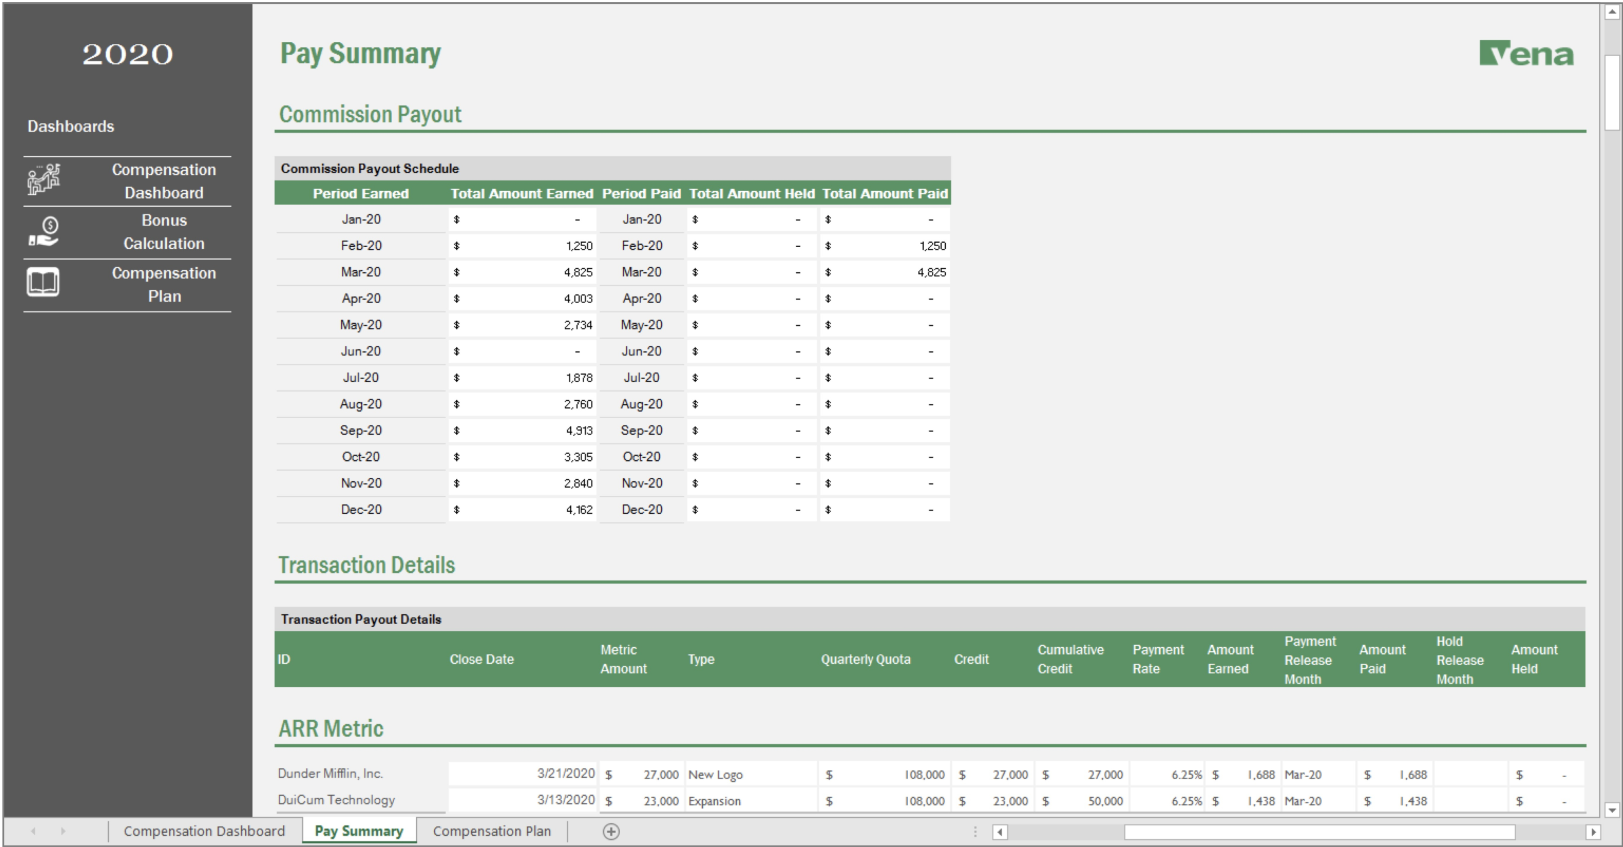 Screenshot of Vena's Pay Summary template